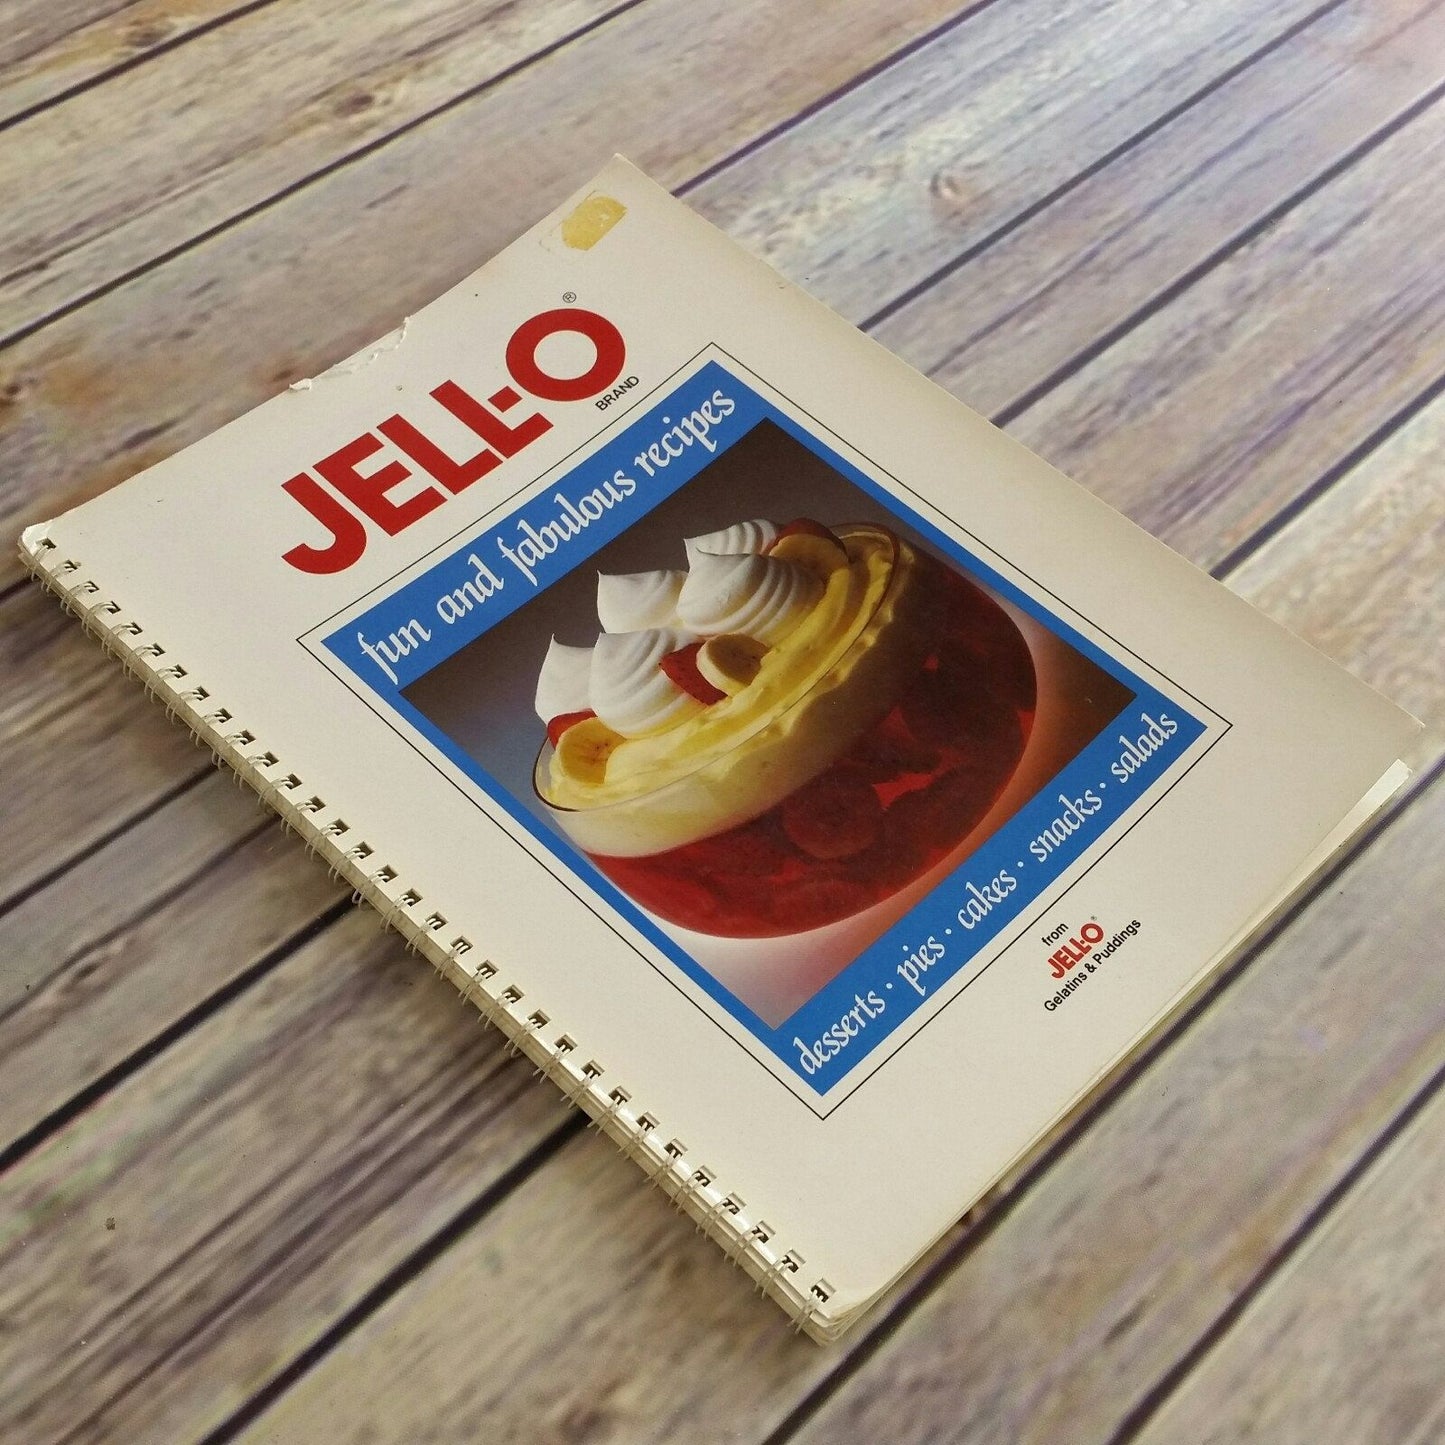 Vintage Jello Cookbook Recipes 1990 Spiral Bound Desserts Pies Cakes Snacks Salads General Foods